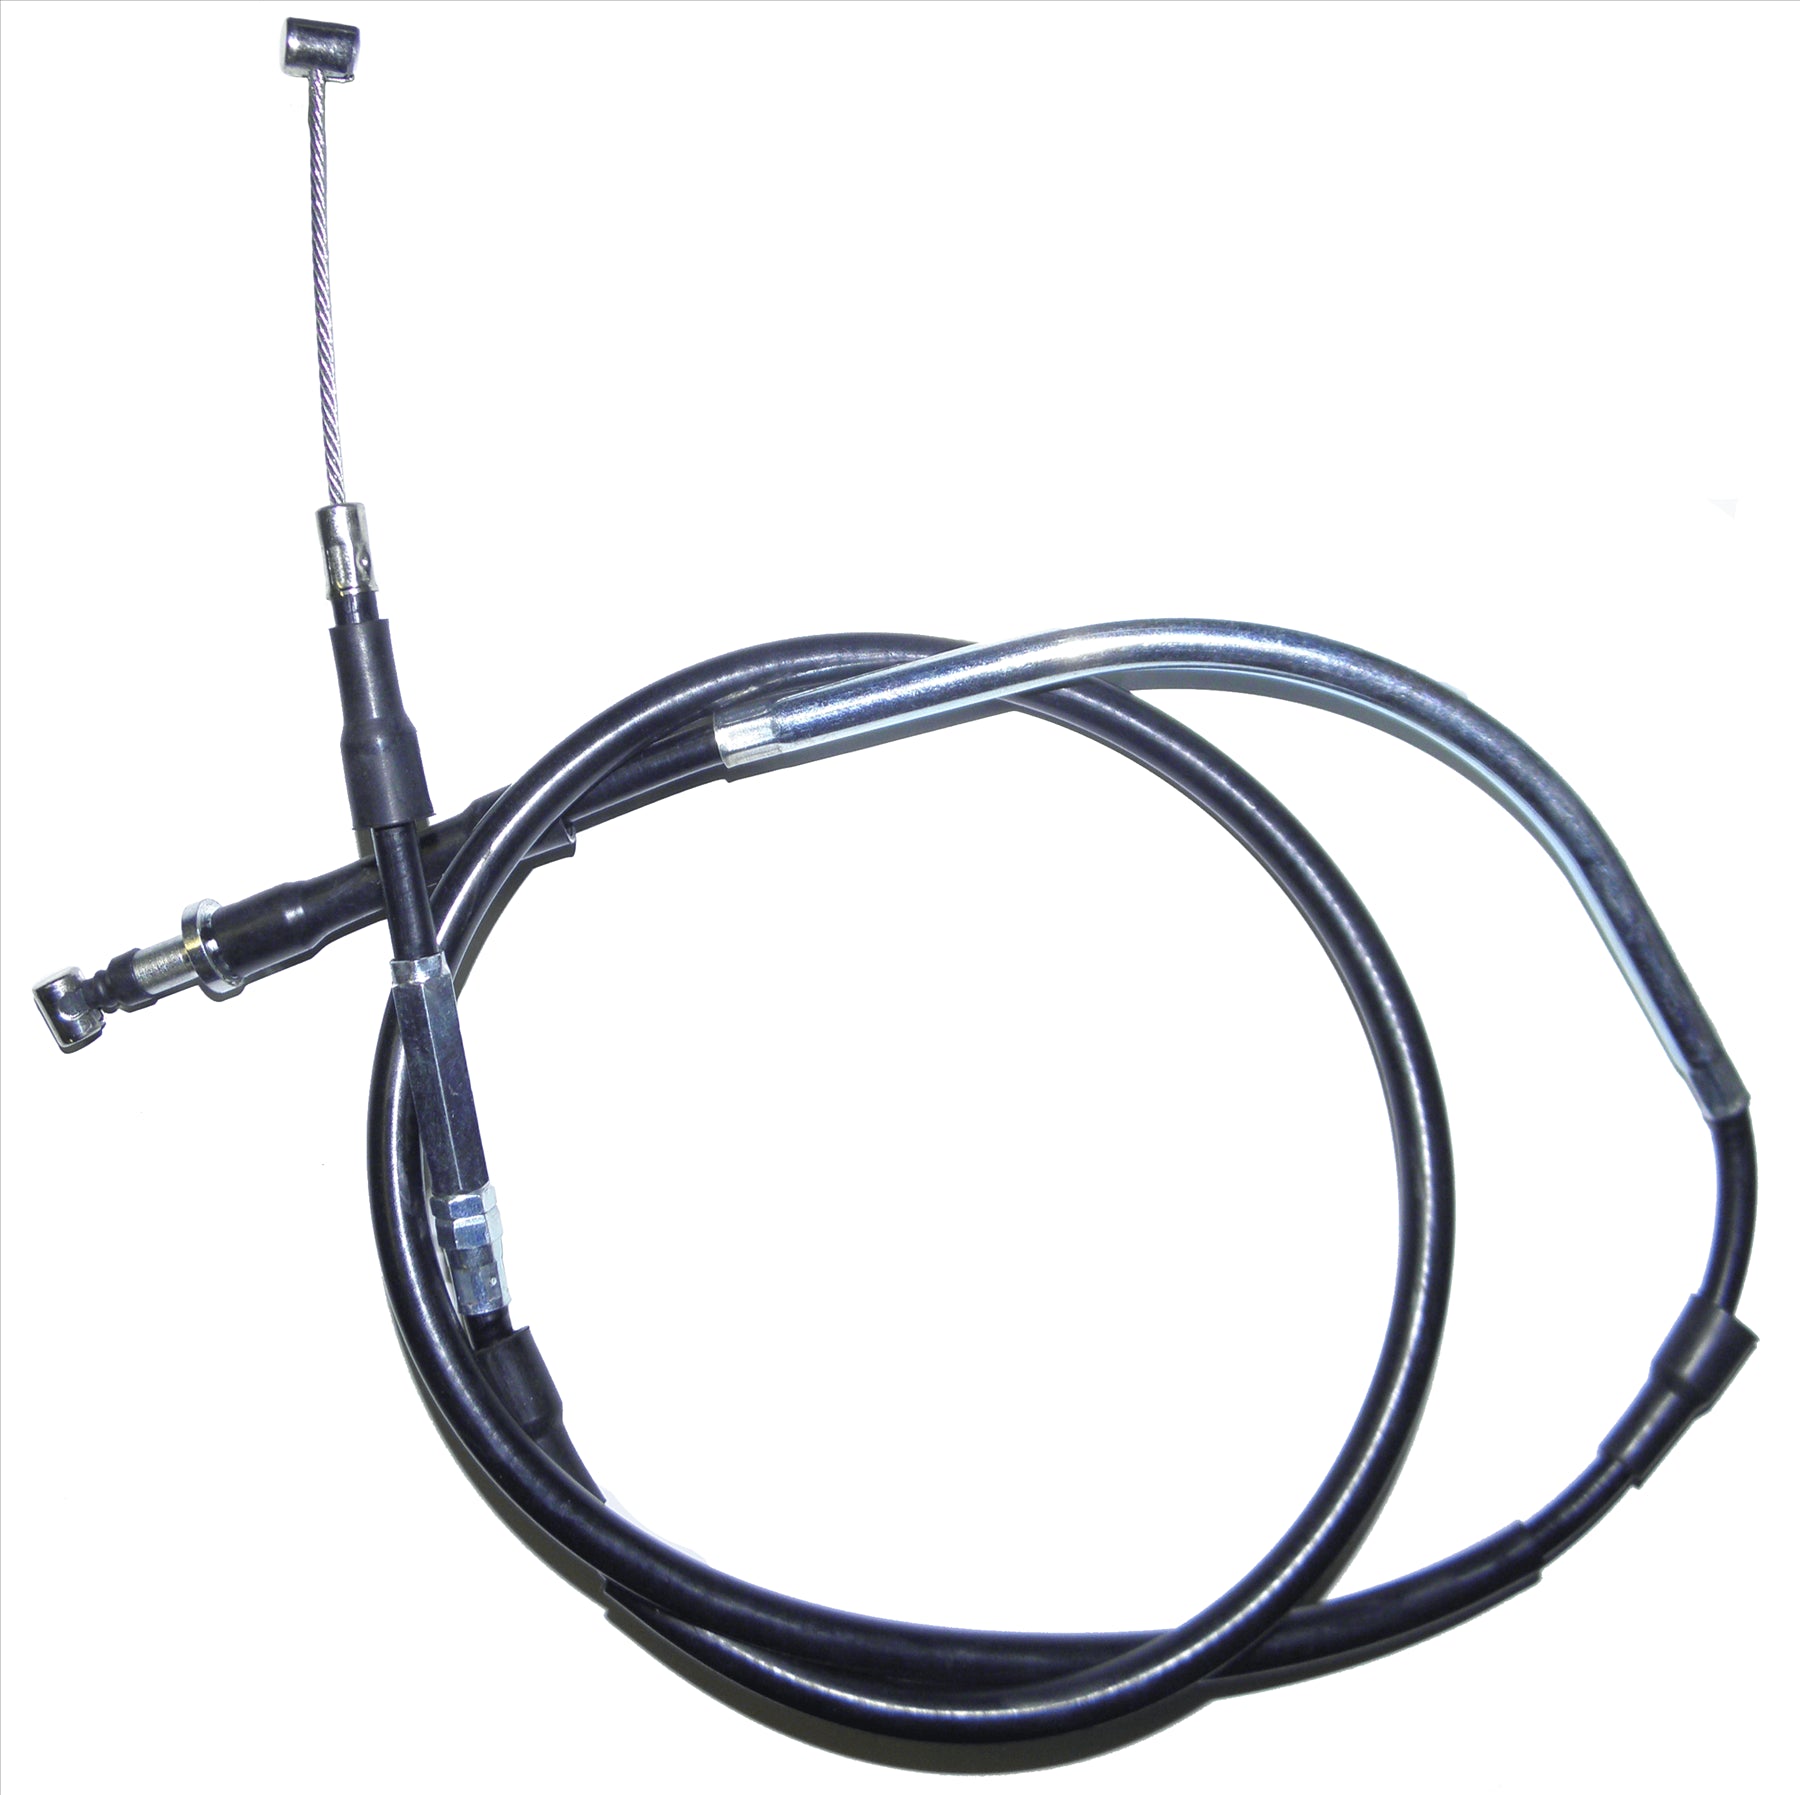 Apico Black Clutch Cable For Kawasaki KX 250F KXF 250 2005-2008